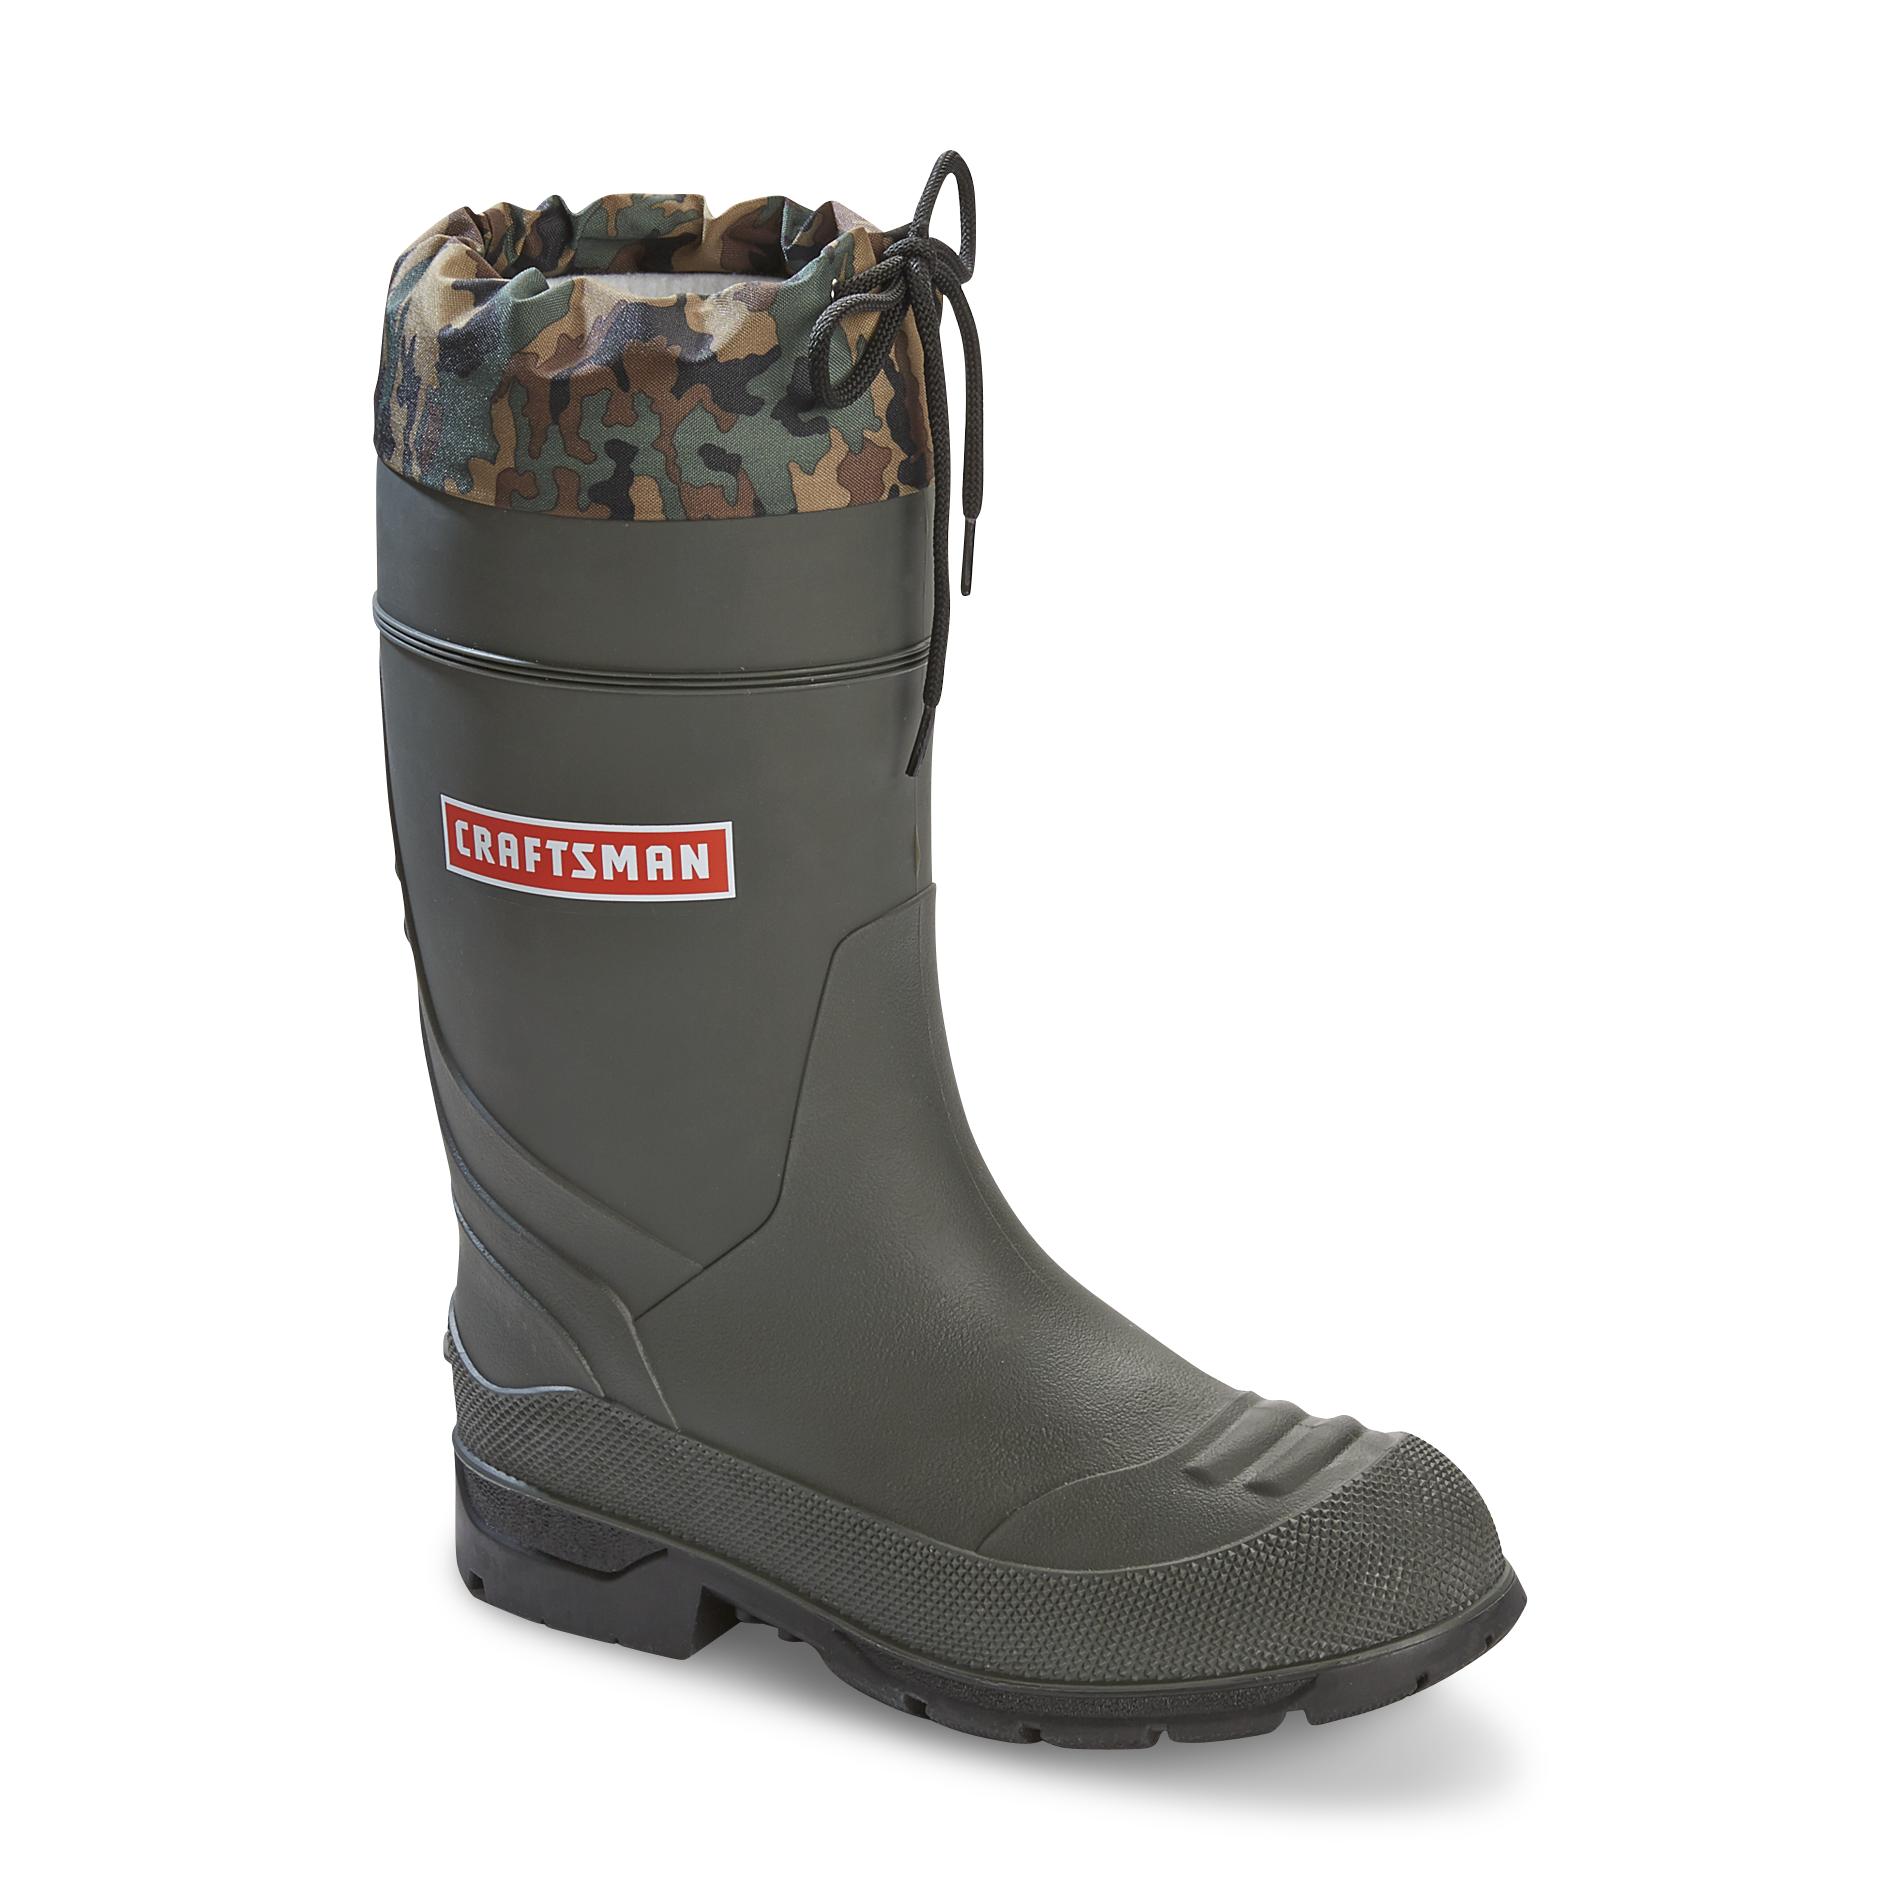 rain boots from Sears.com